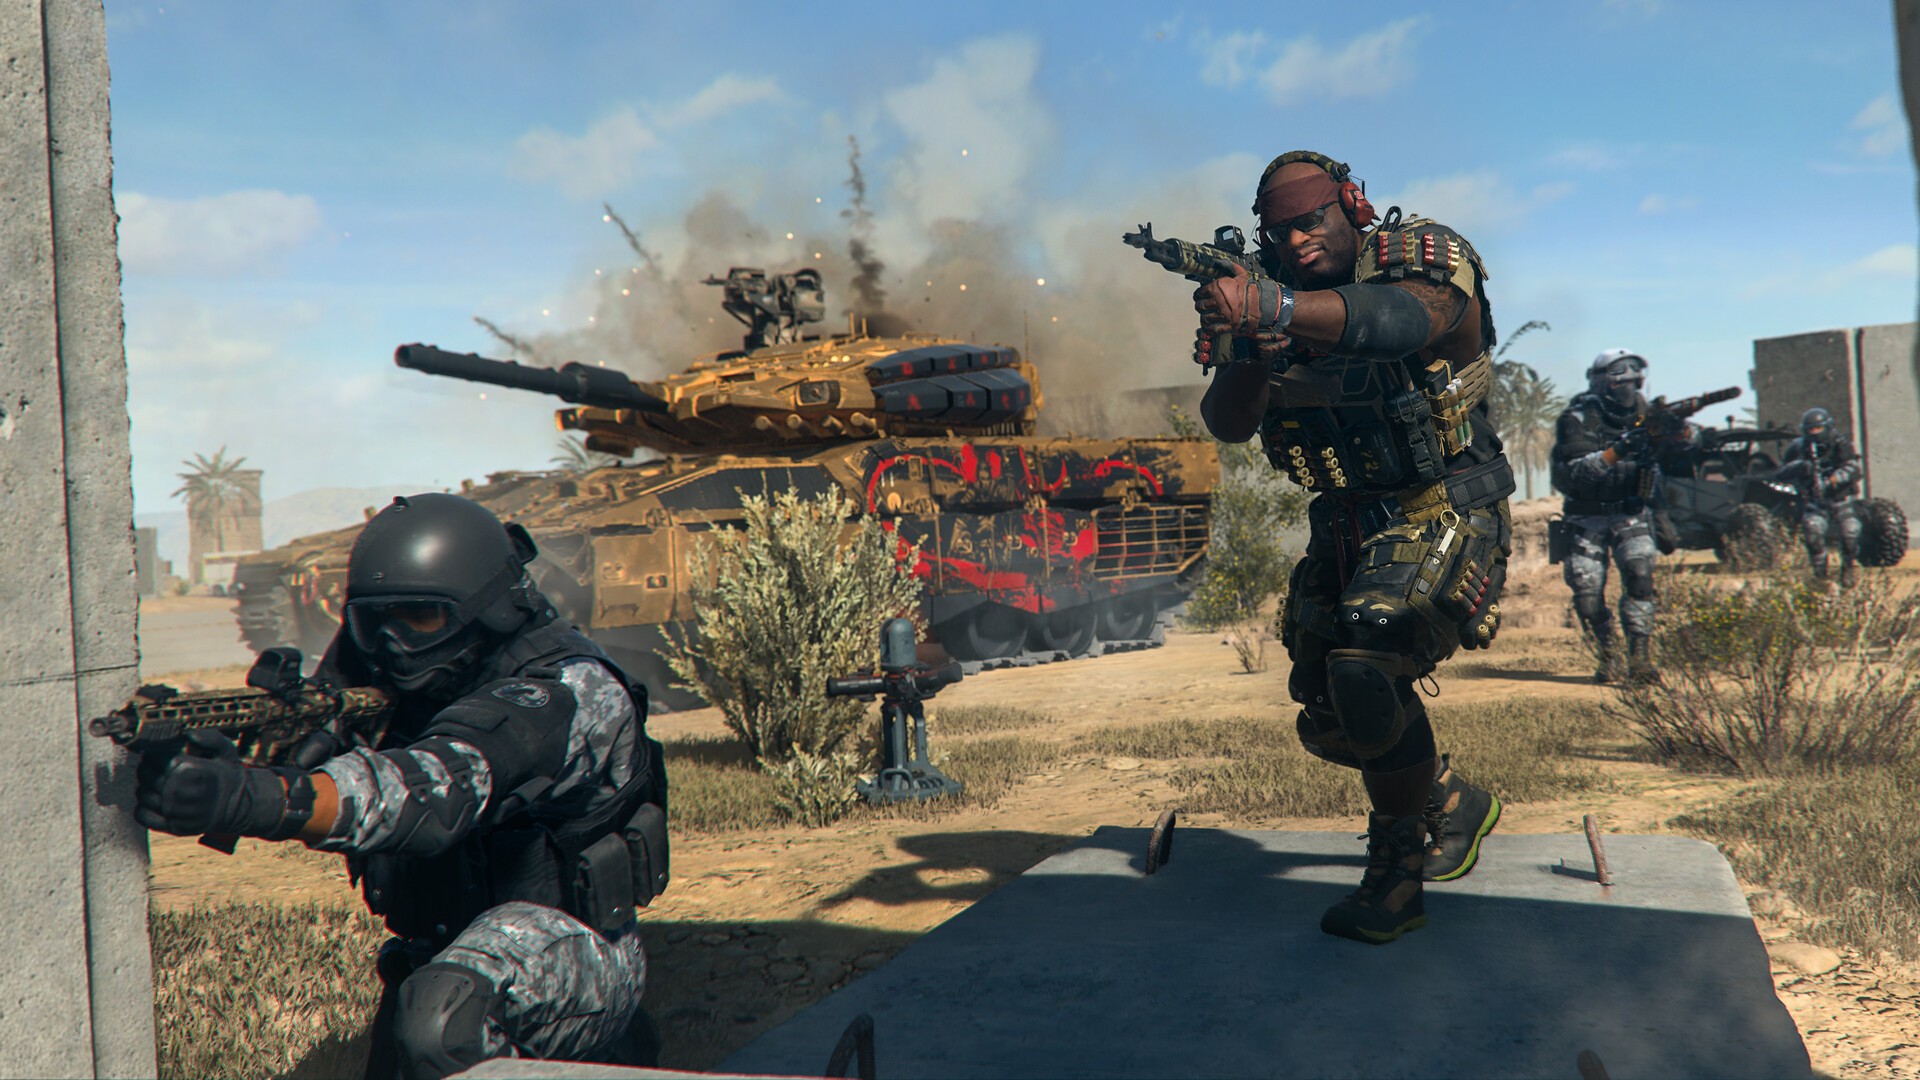 Call of Duty: Modern Warfare 2 - Cross-Gen Bundle Xbox Series X